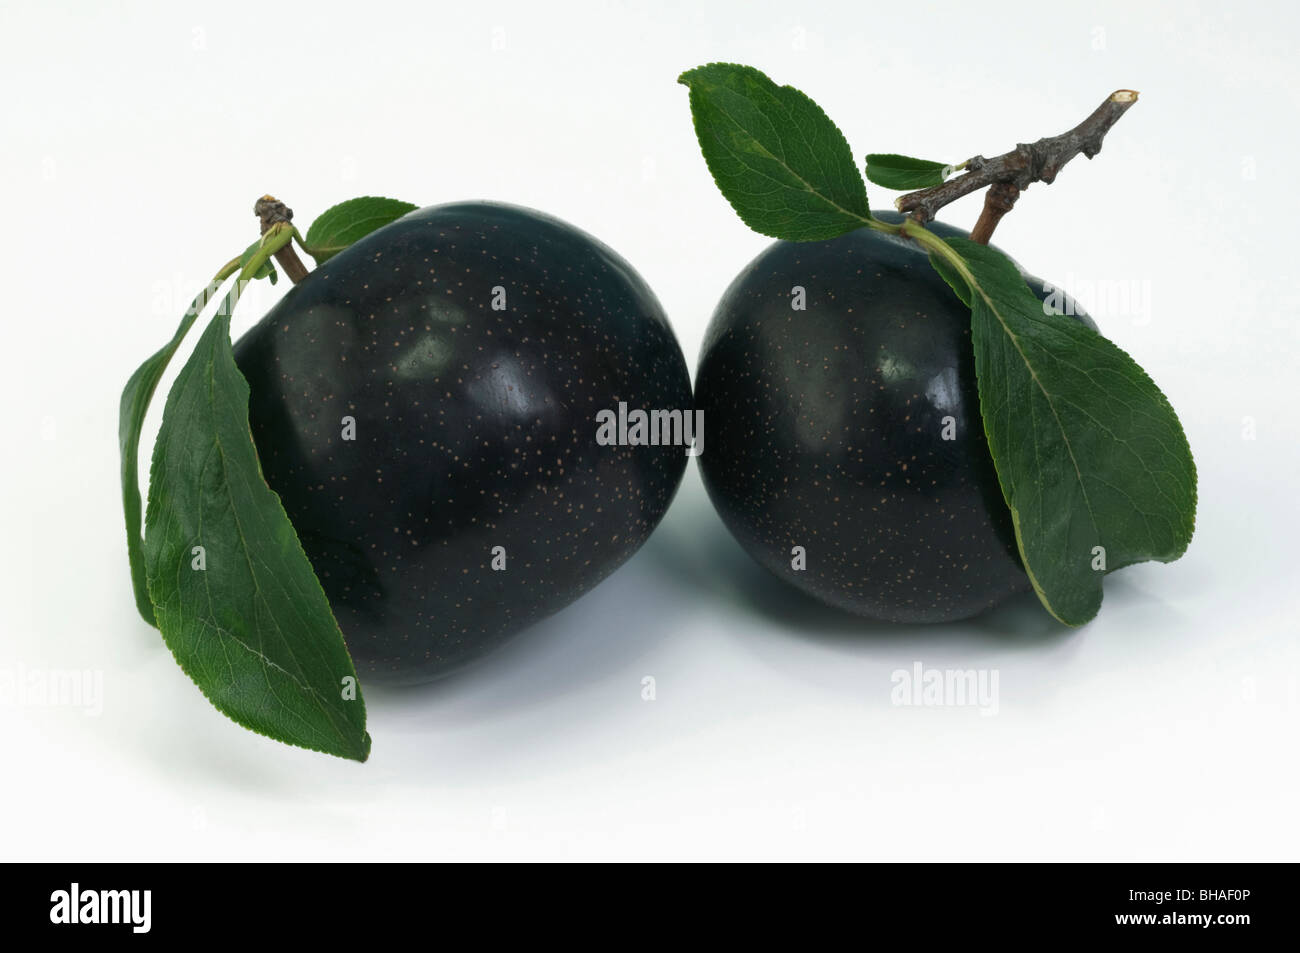 La prugna cinese, giapponese prugna (Prunus salicina), varietà: Angeleno, due frutti maturi con foglie, studio immagine. Foto Stock